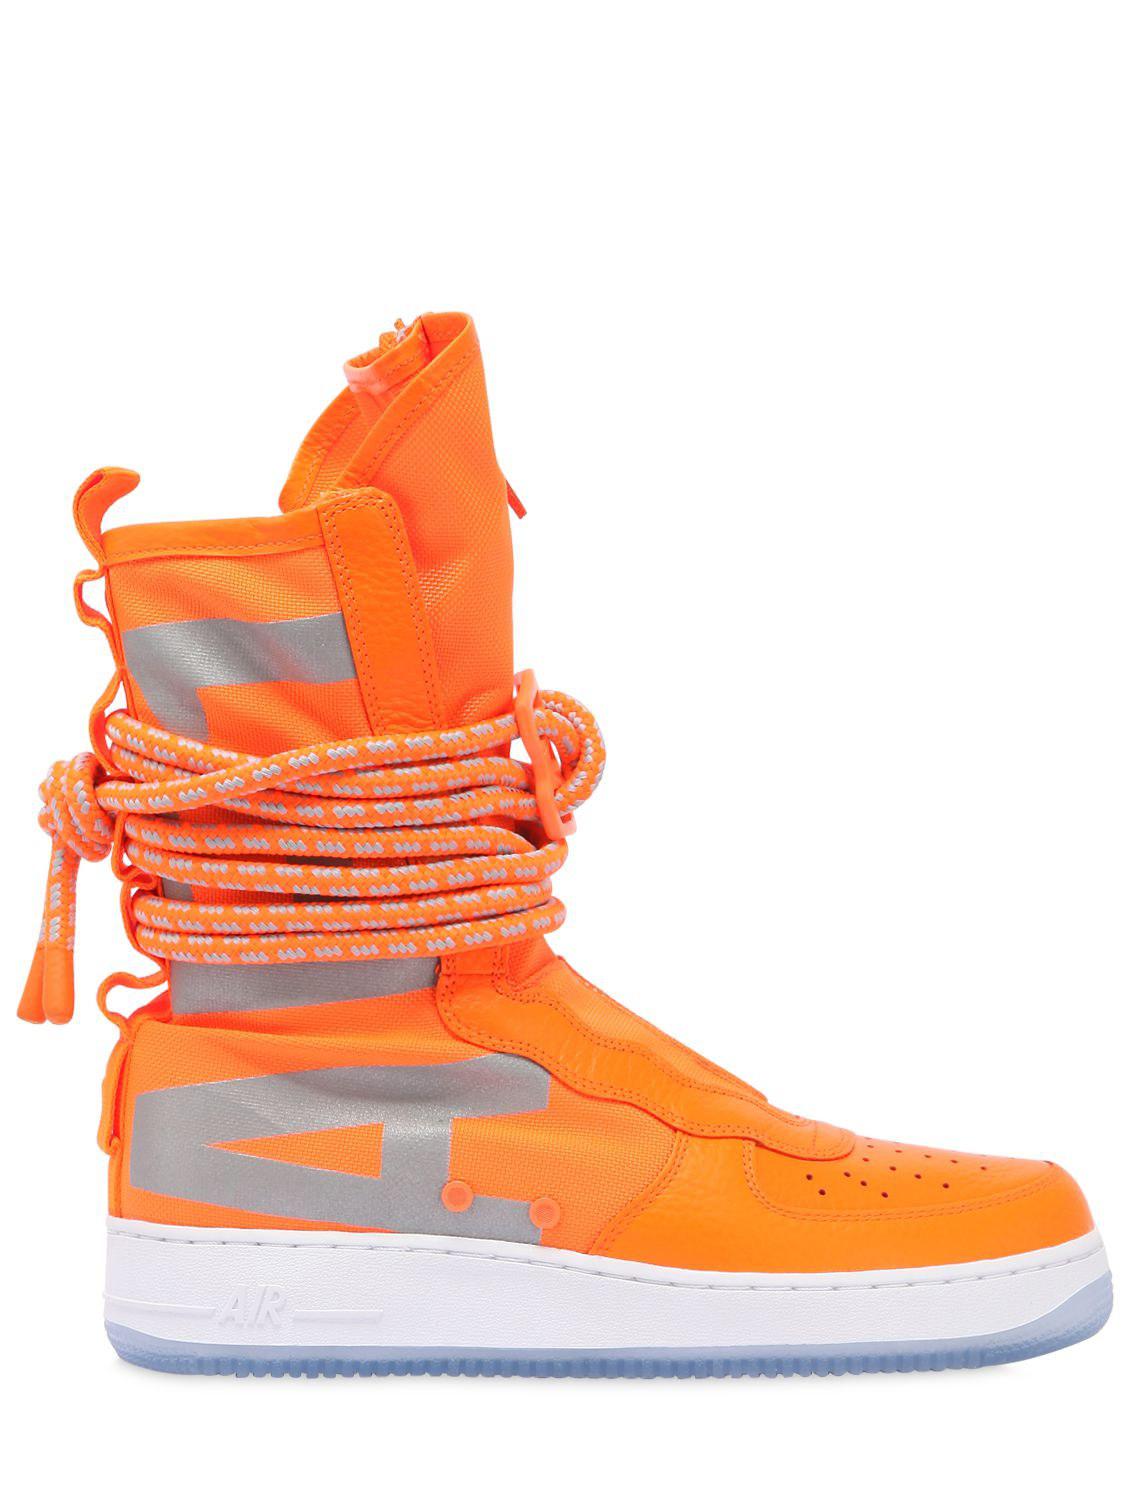 Nike Sf Air Force 1 Sneaker Boots in Orange | Lyst